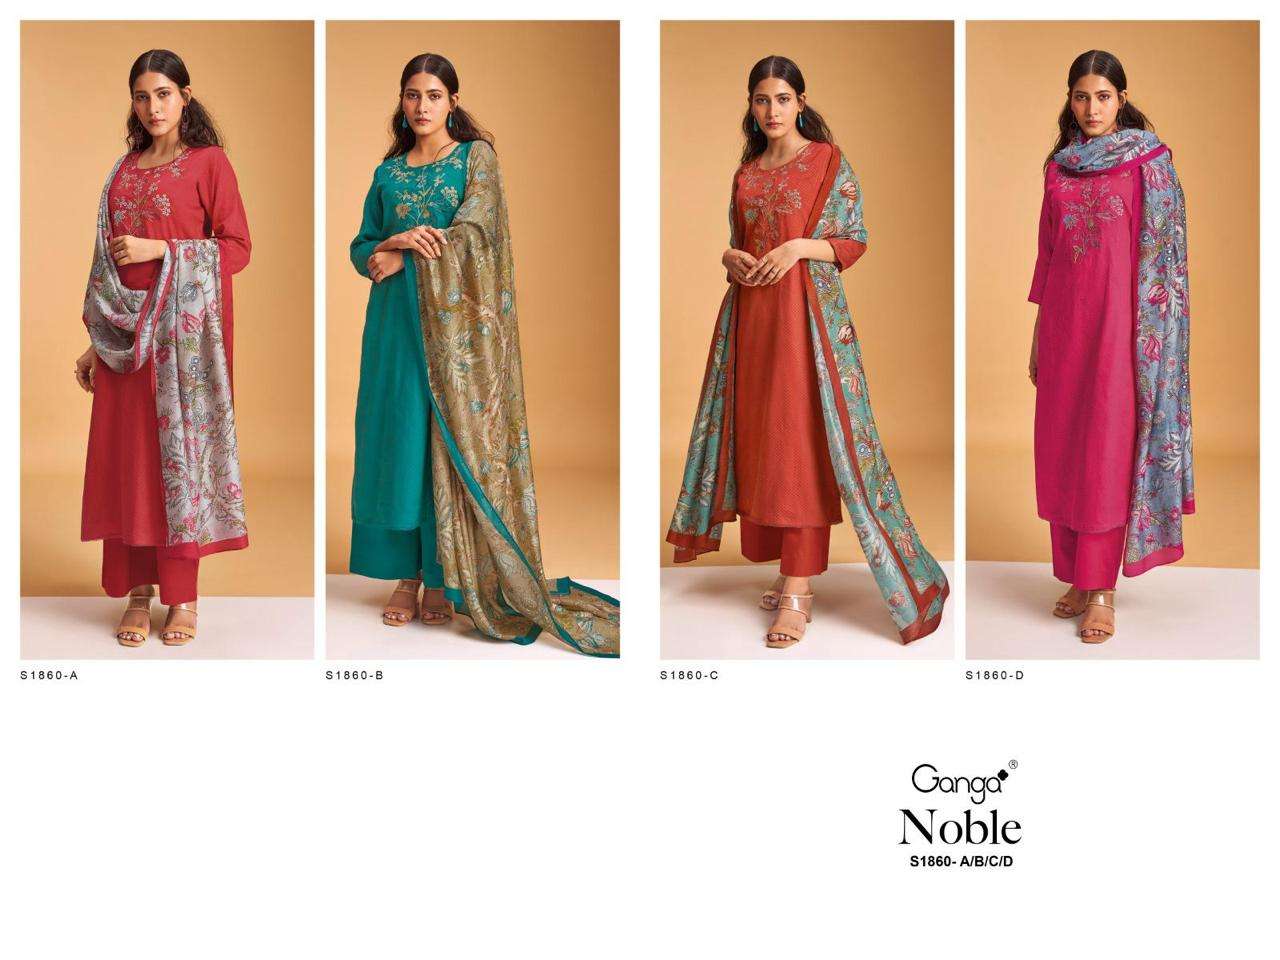 ganga noble 1860 series stylish designer salwar kameez catalogue online wholesaler surat